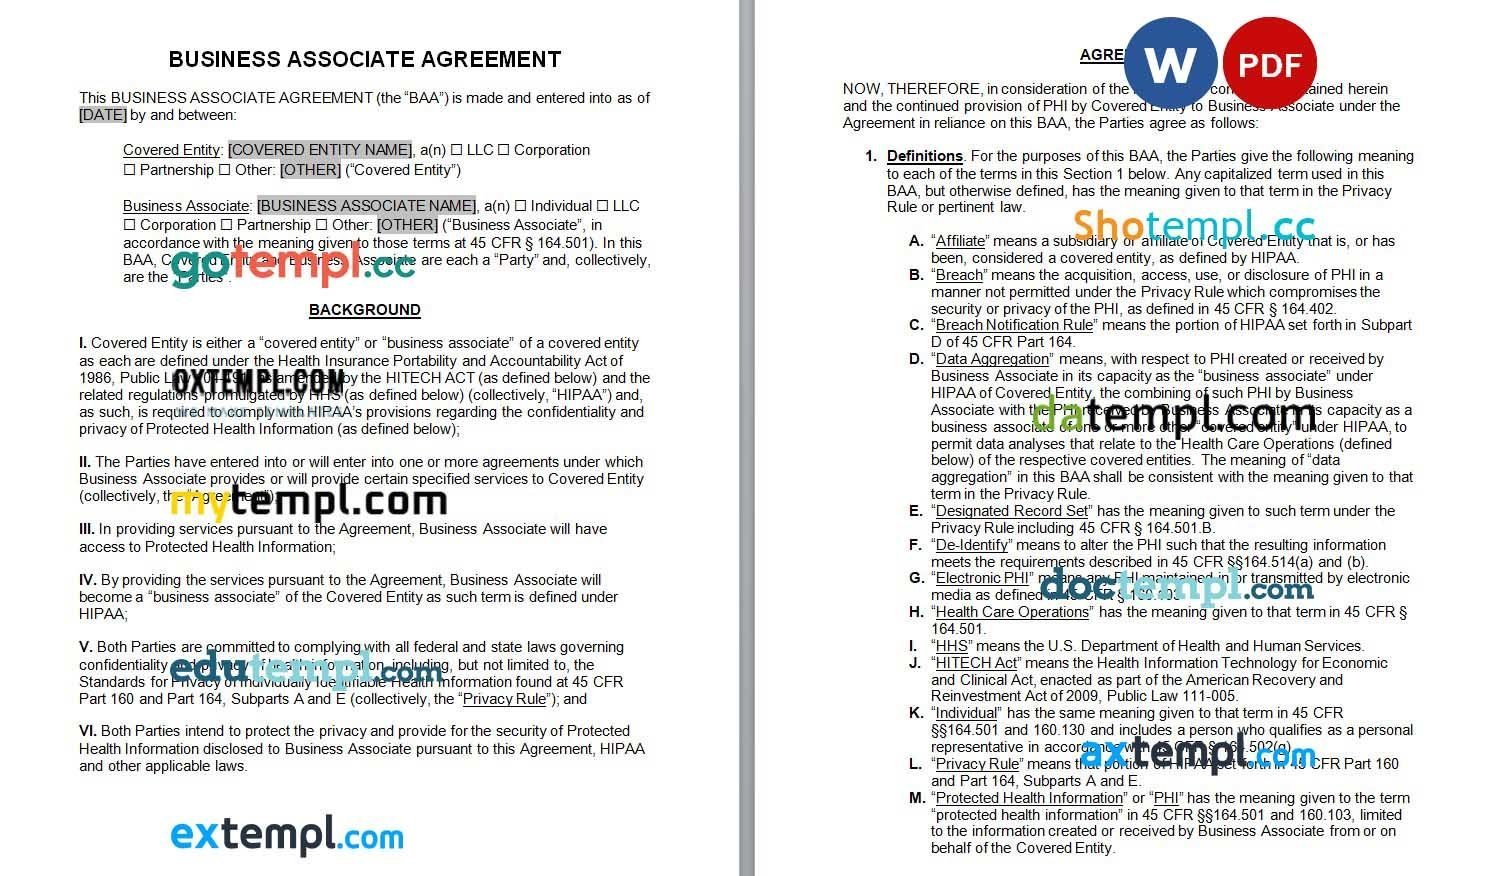 Business Associate Agreement HIPAA Word example, fully editable